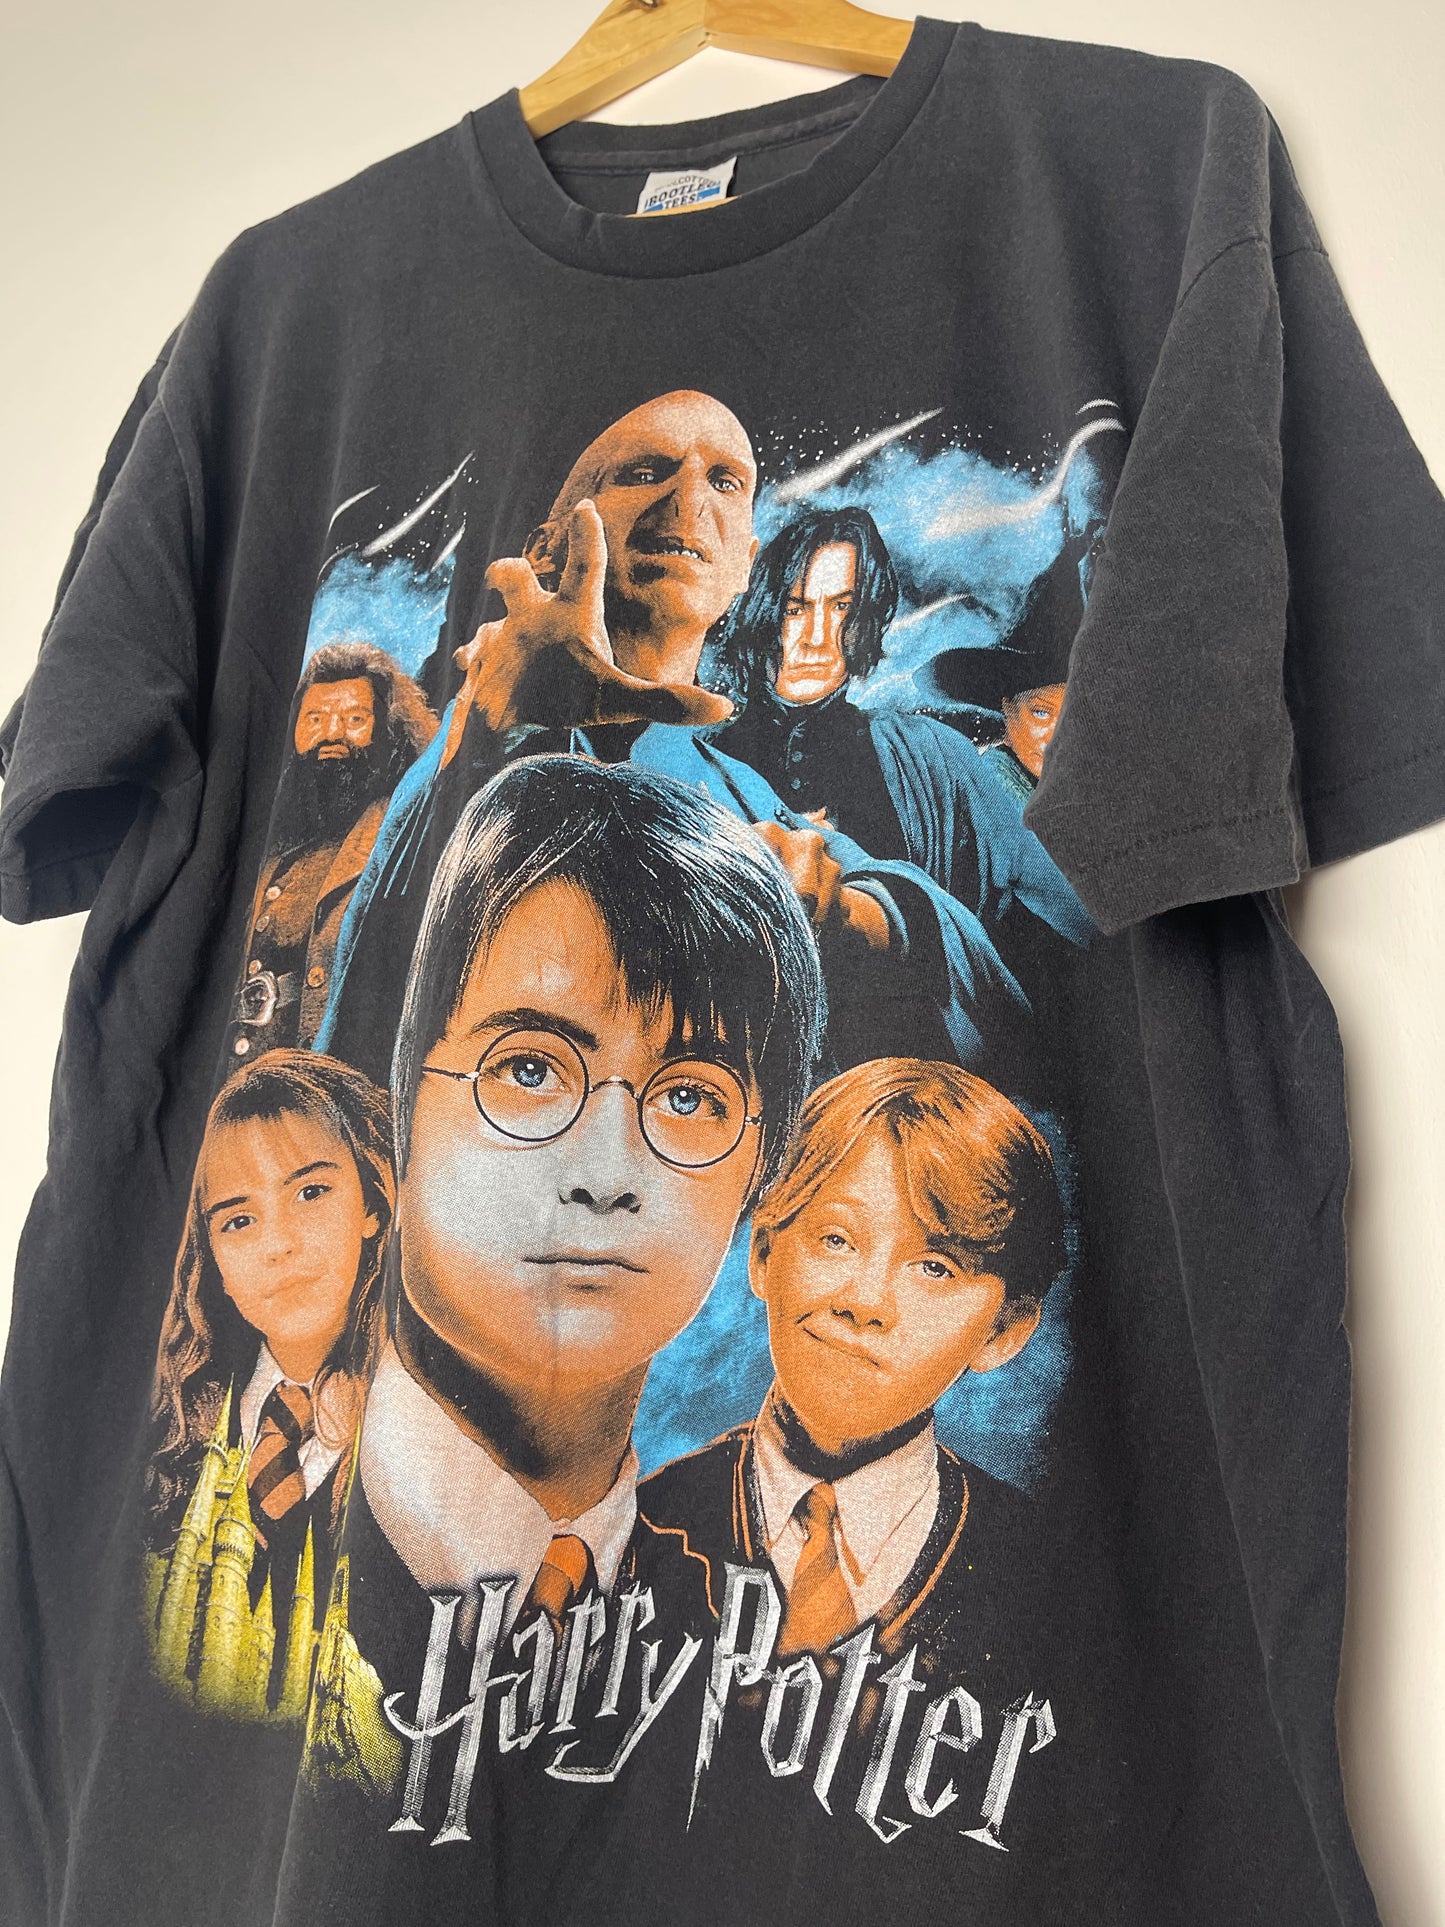 Vintage Style Harry Potter T-shirt - X Large